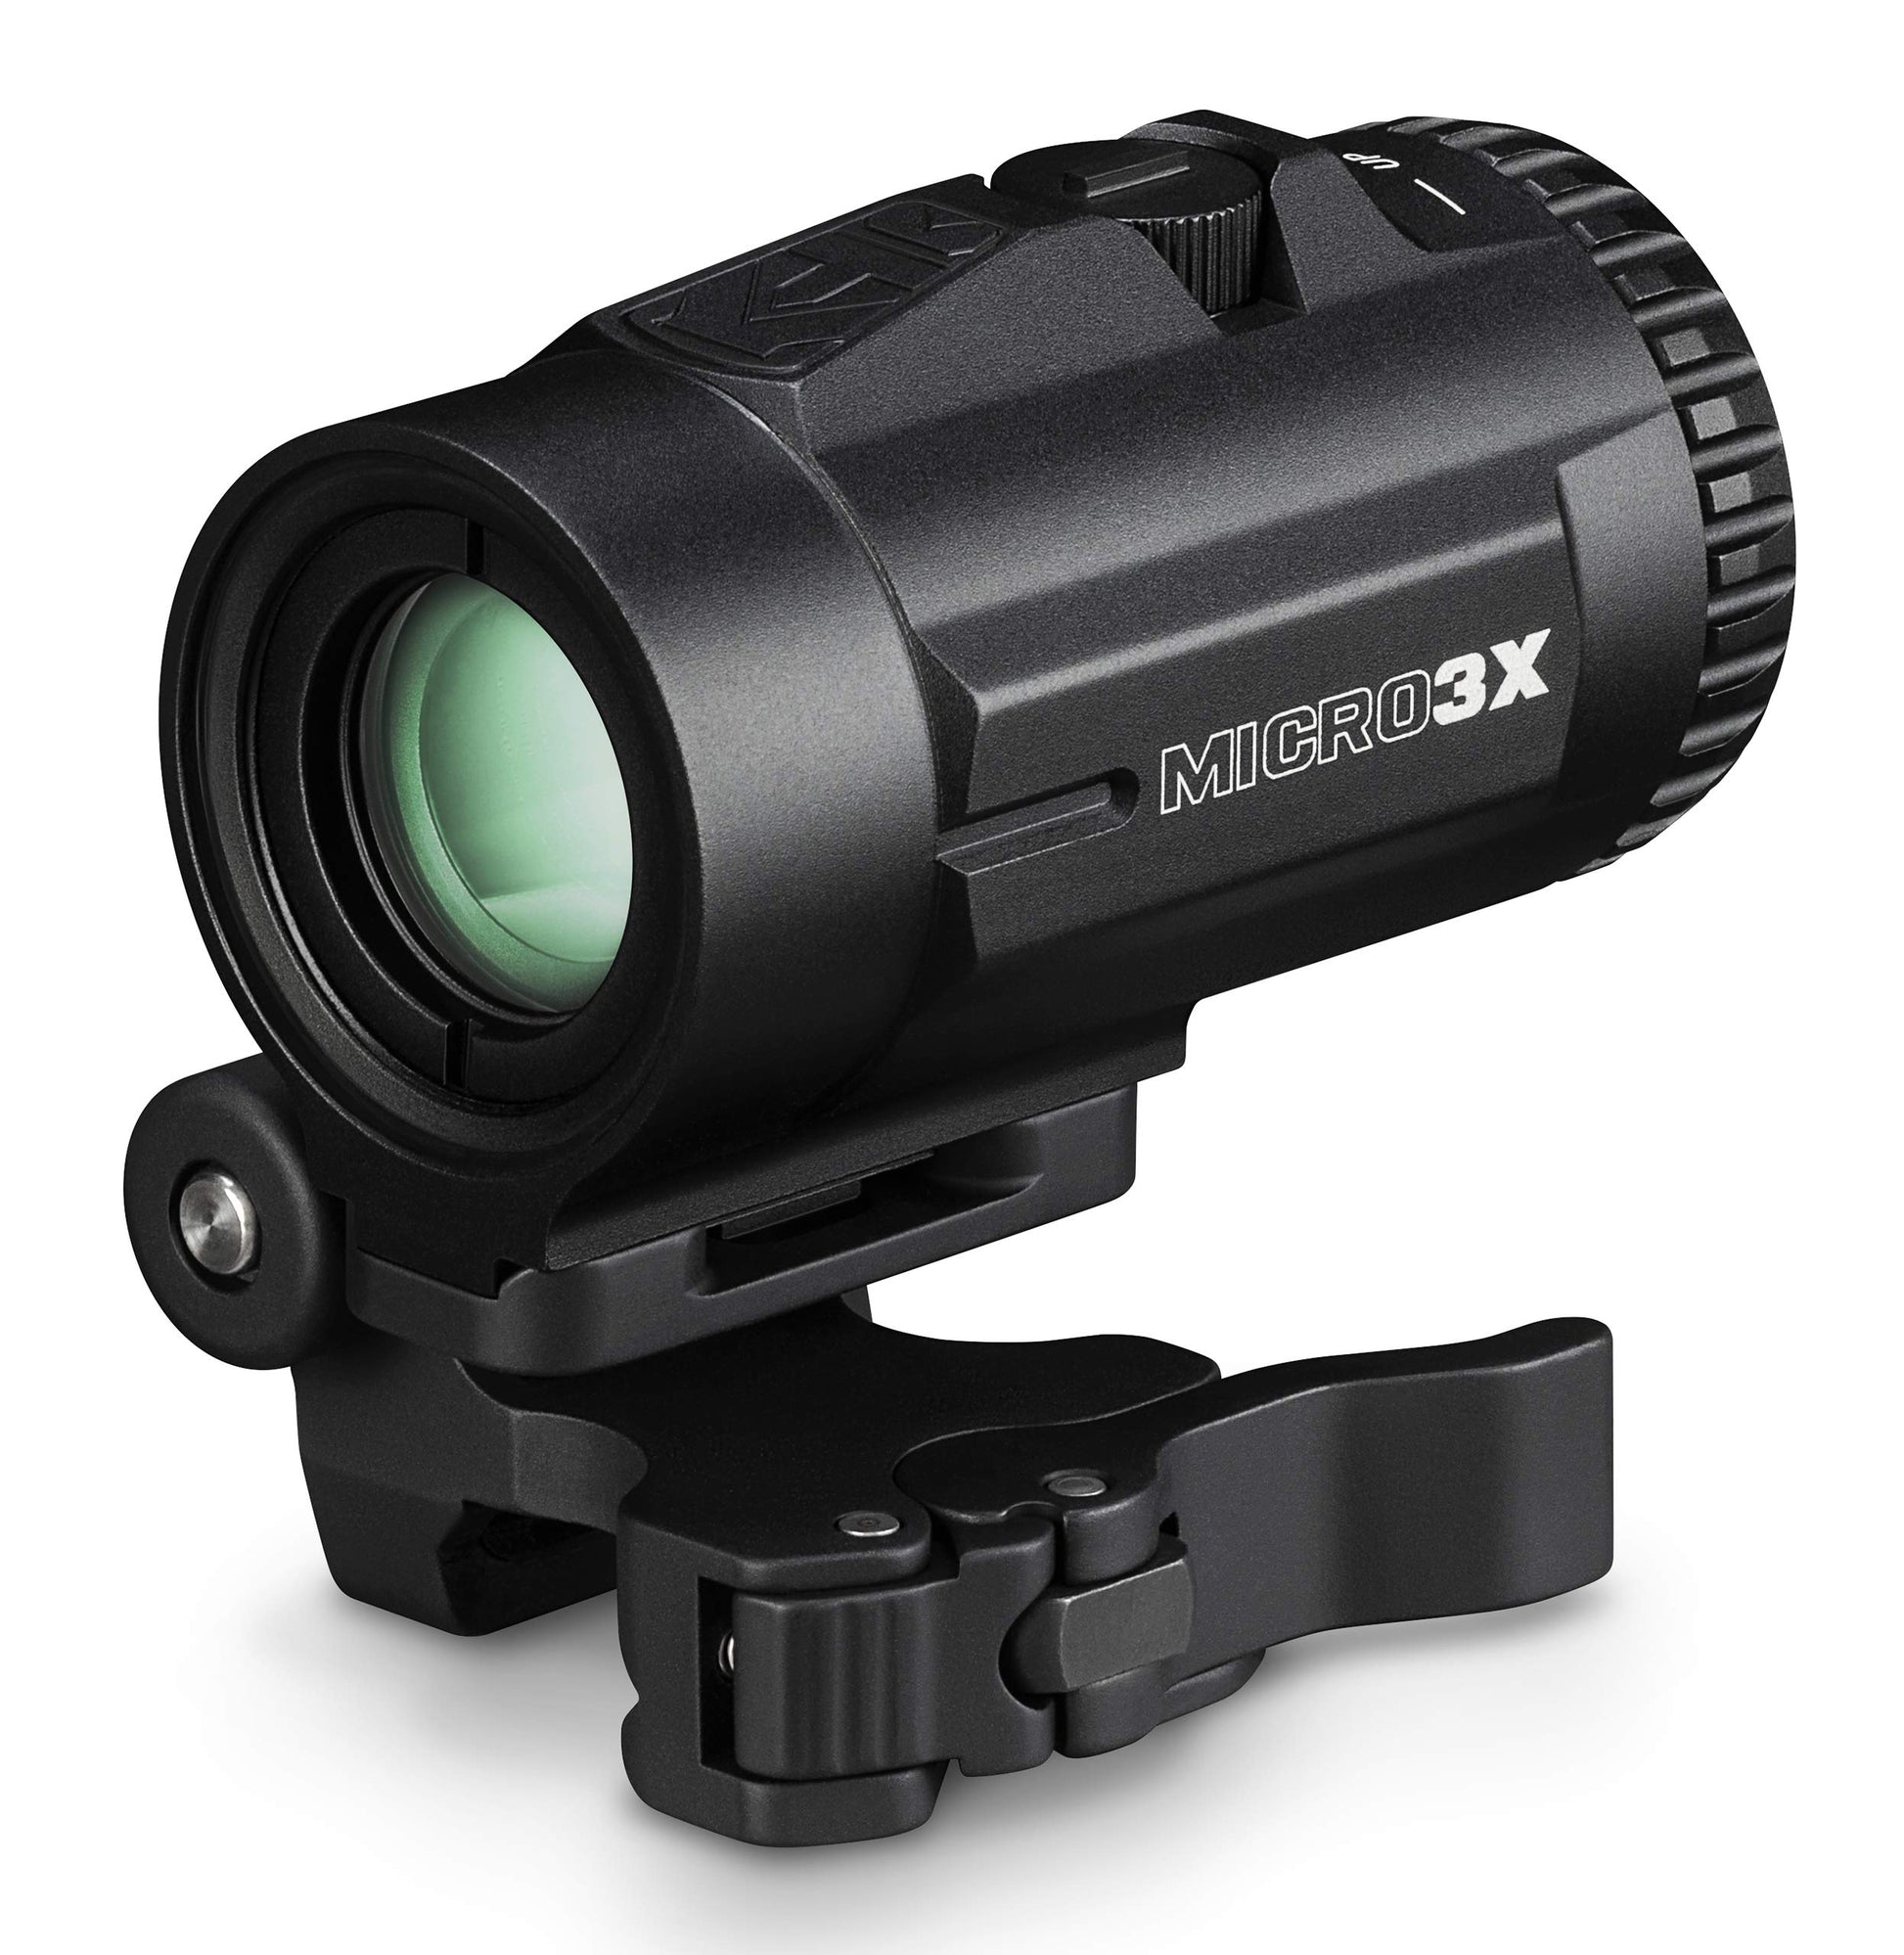 Ultraoptix 3 Round Lighted Magnifier - SV3LPLED